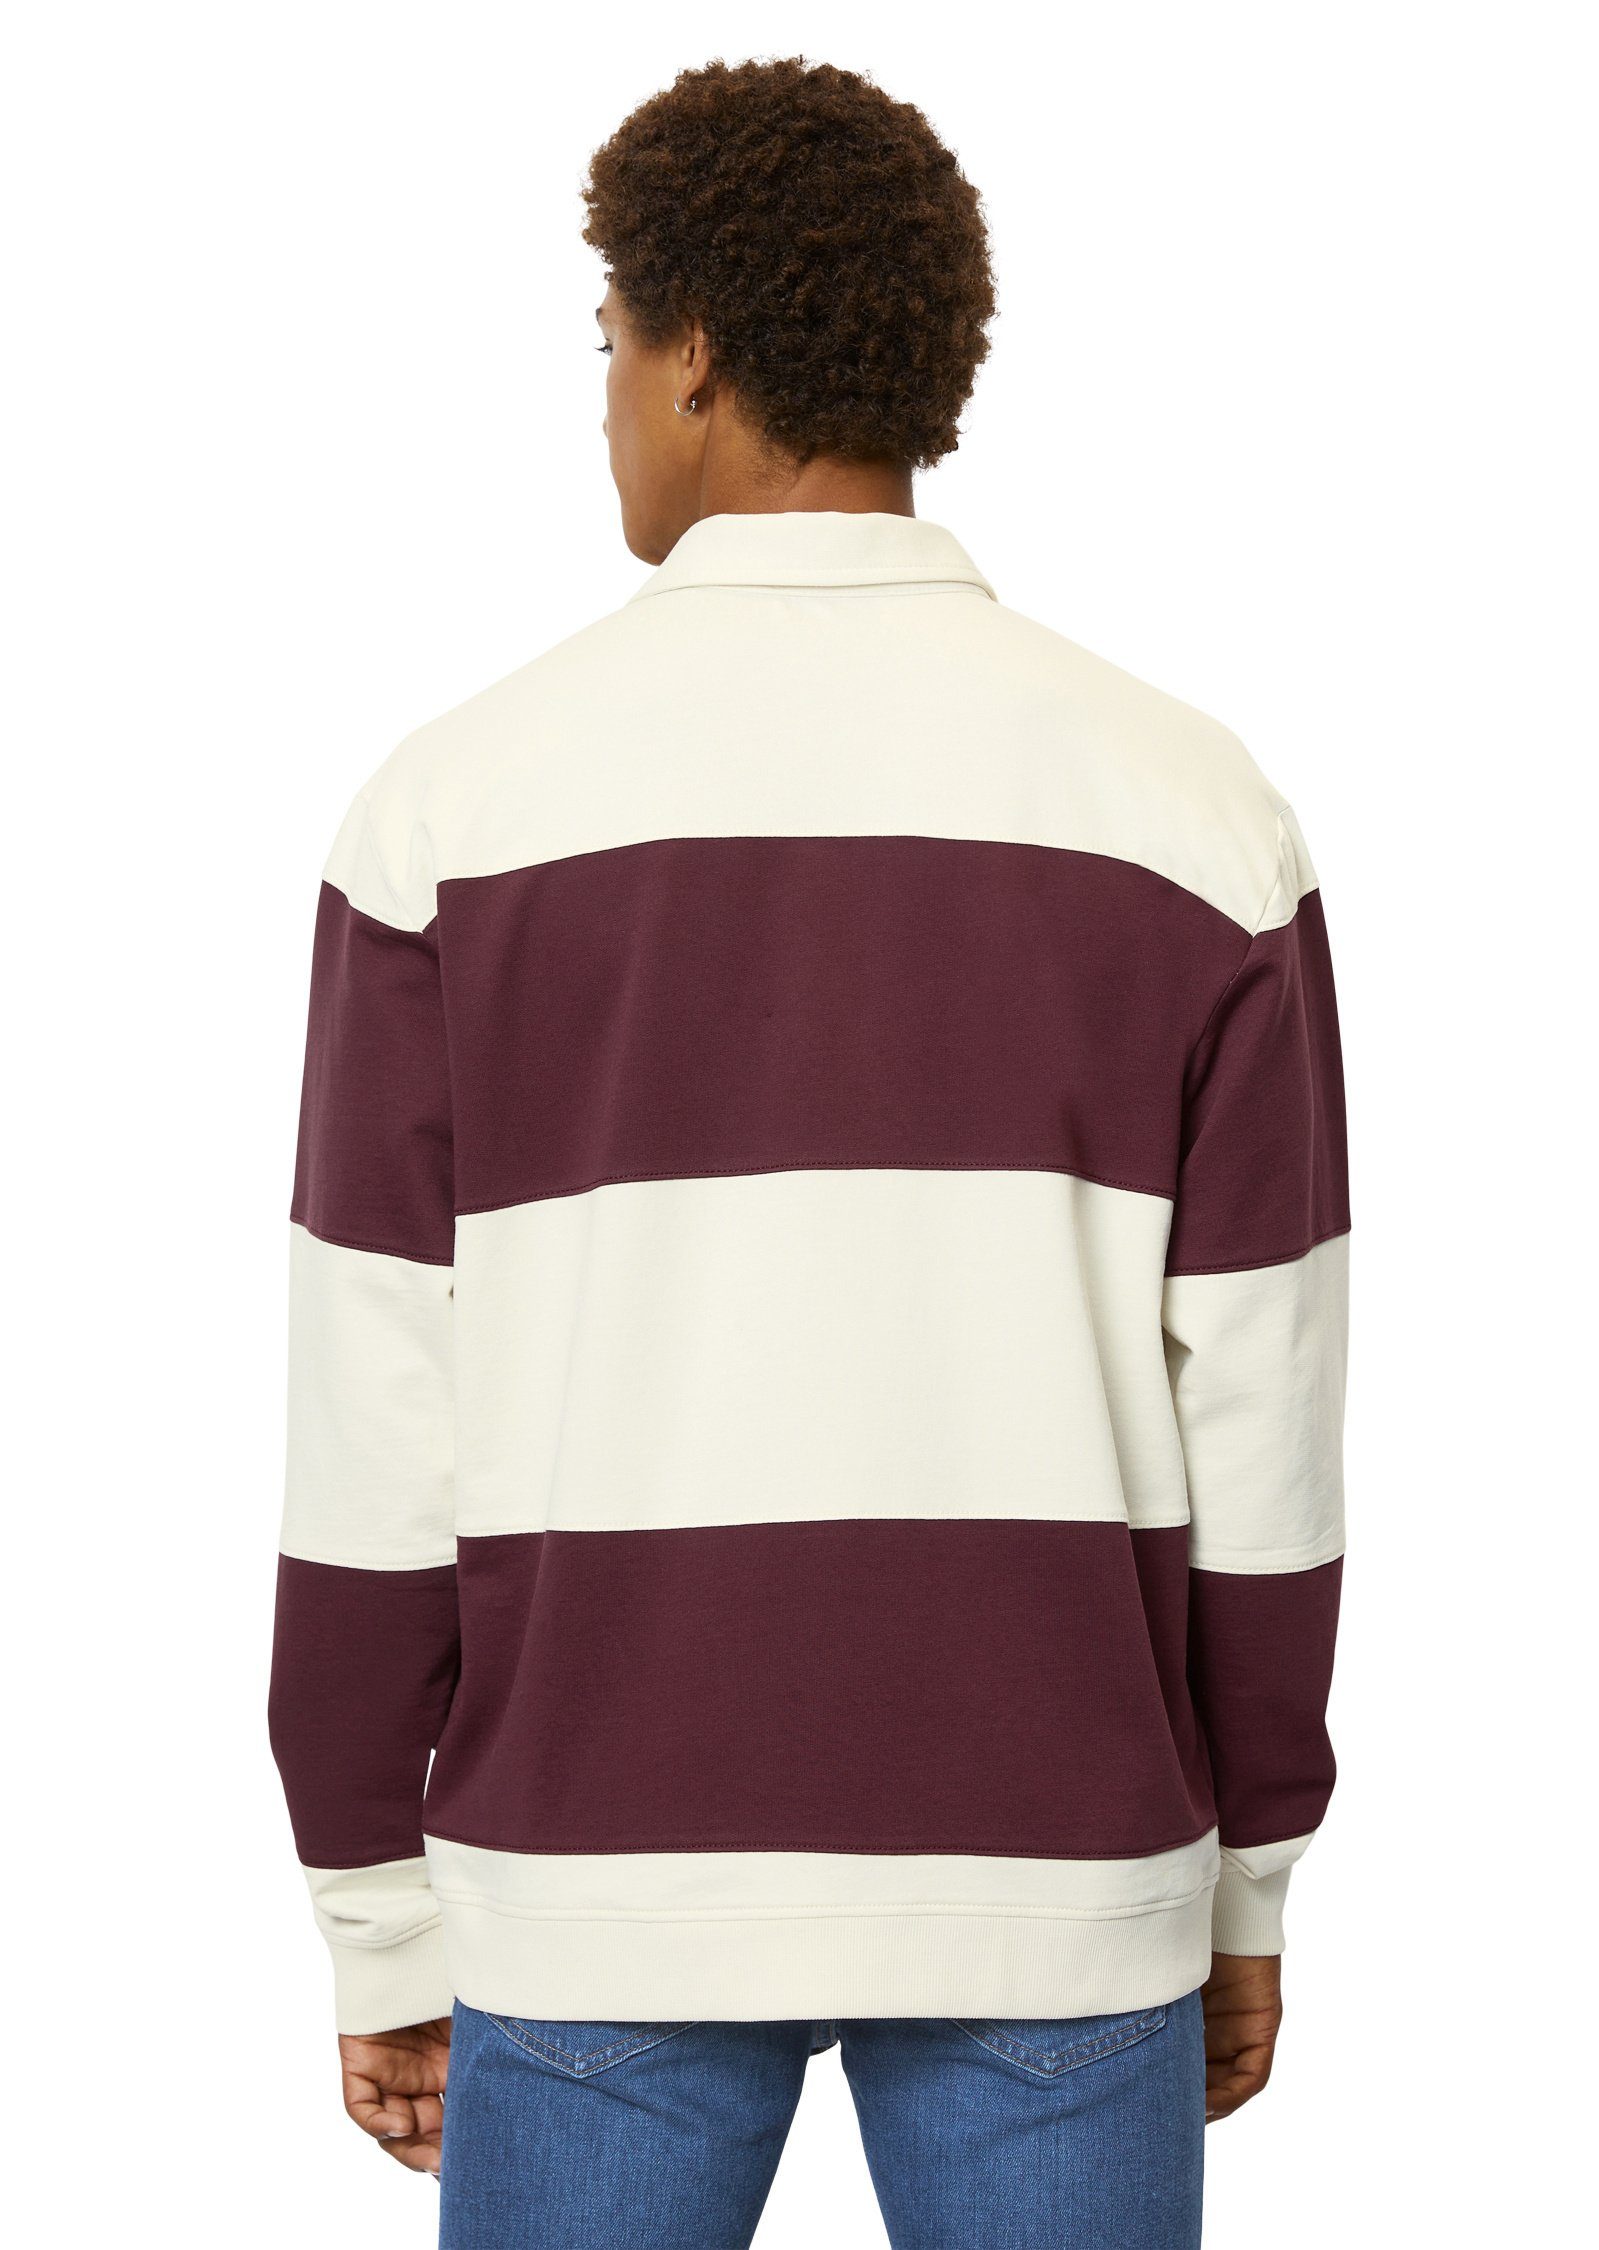 Marc O'Polo DENIM Sweatshirt aus rot Cotton Organic